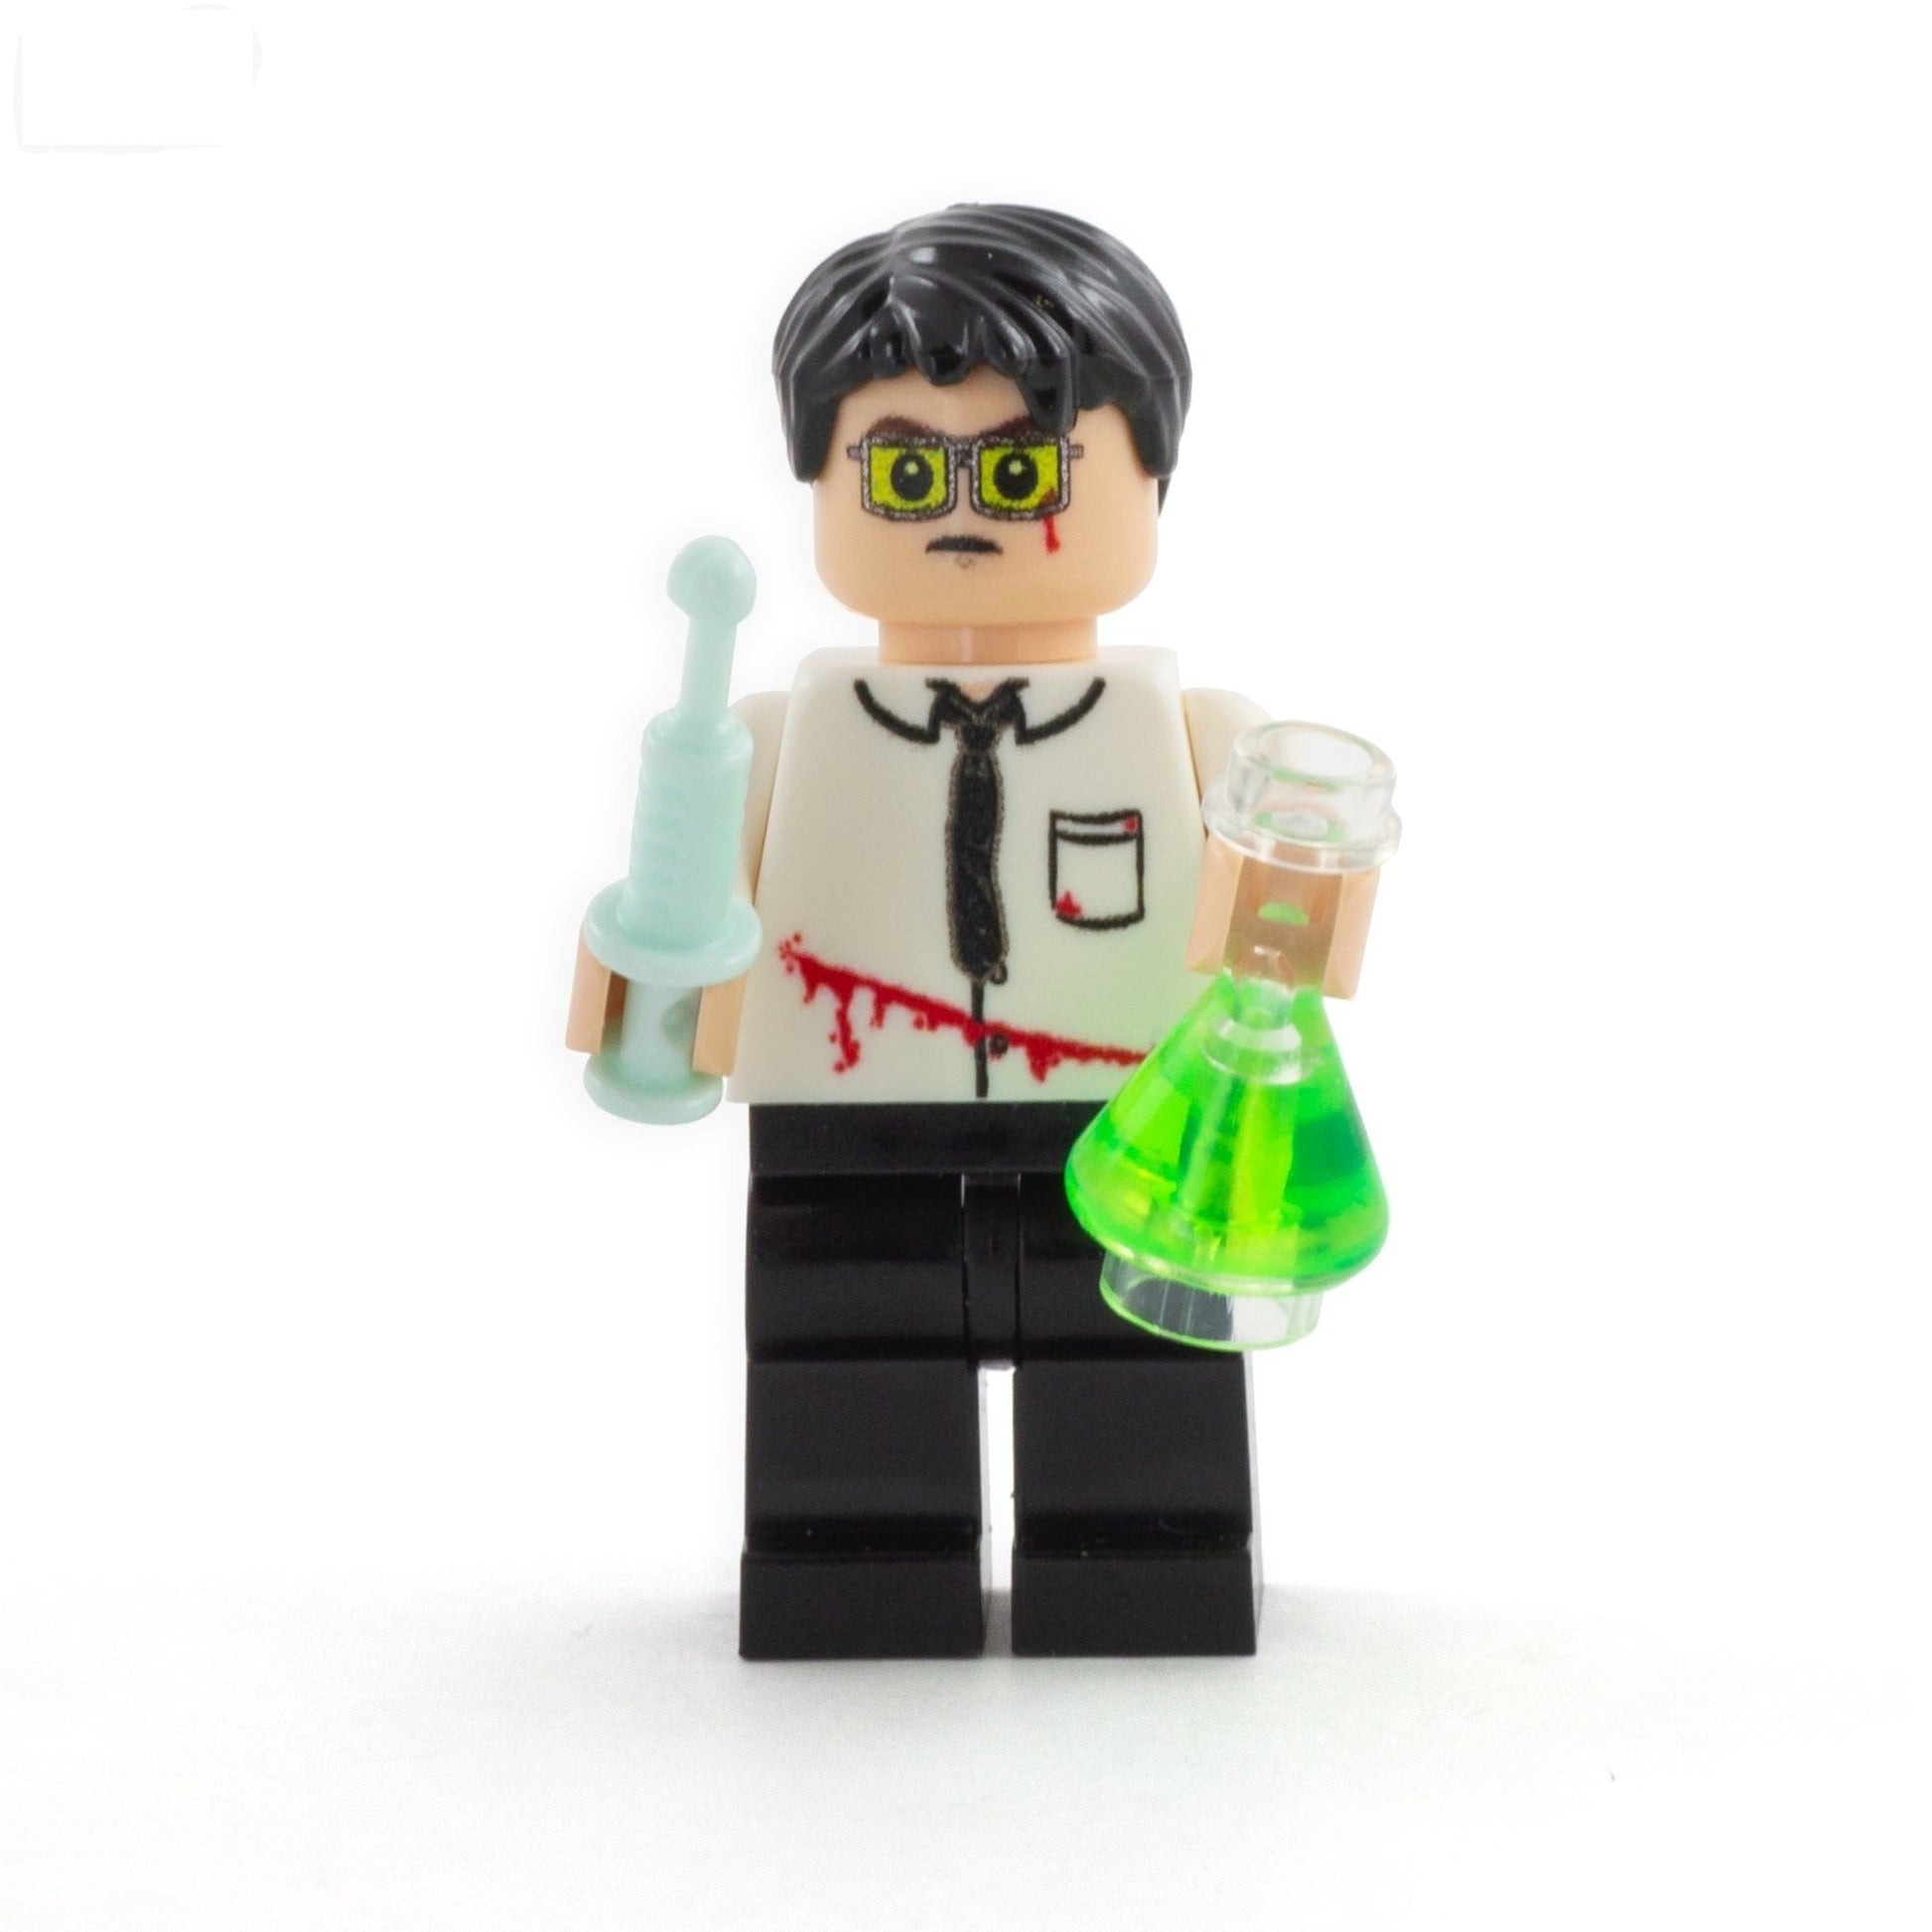 Herbert West, Re-animator - Custom LEGO Minifigure